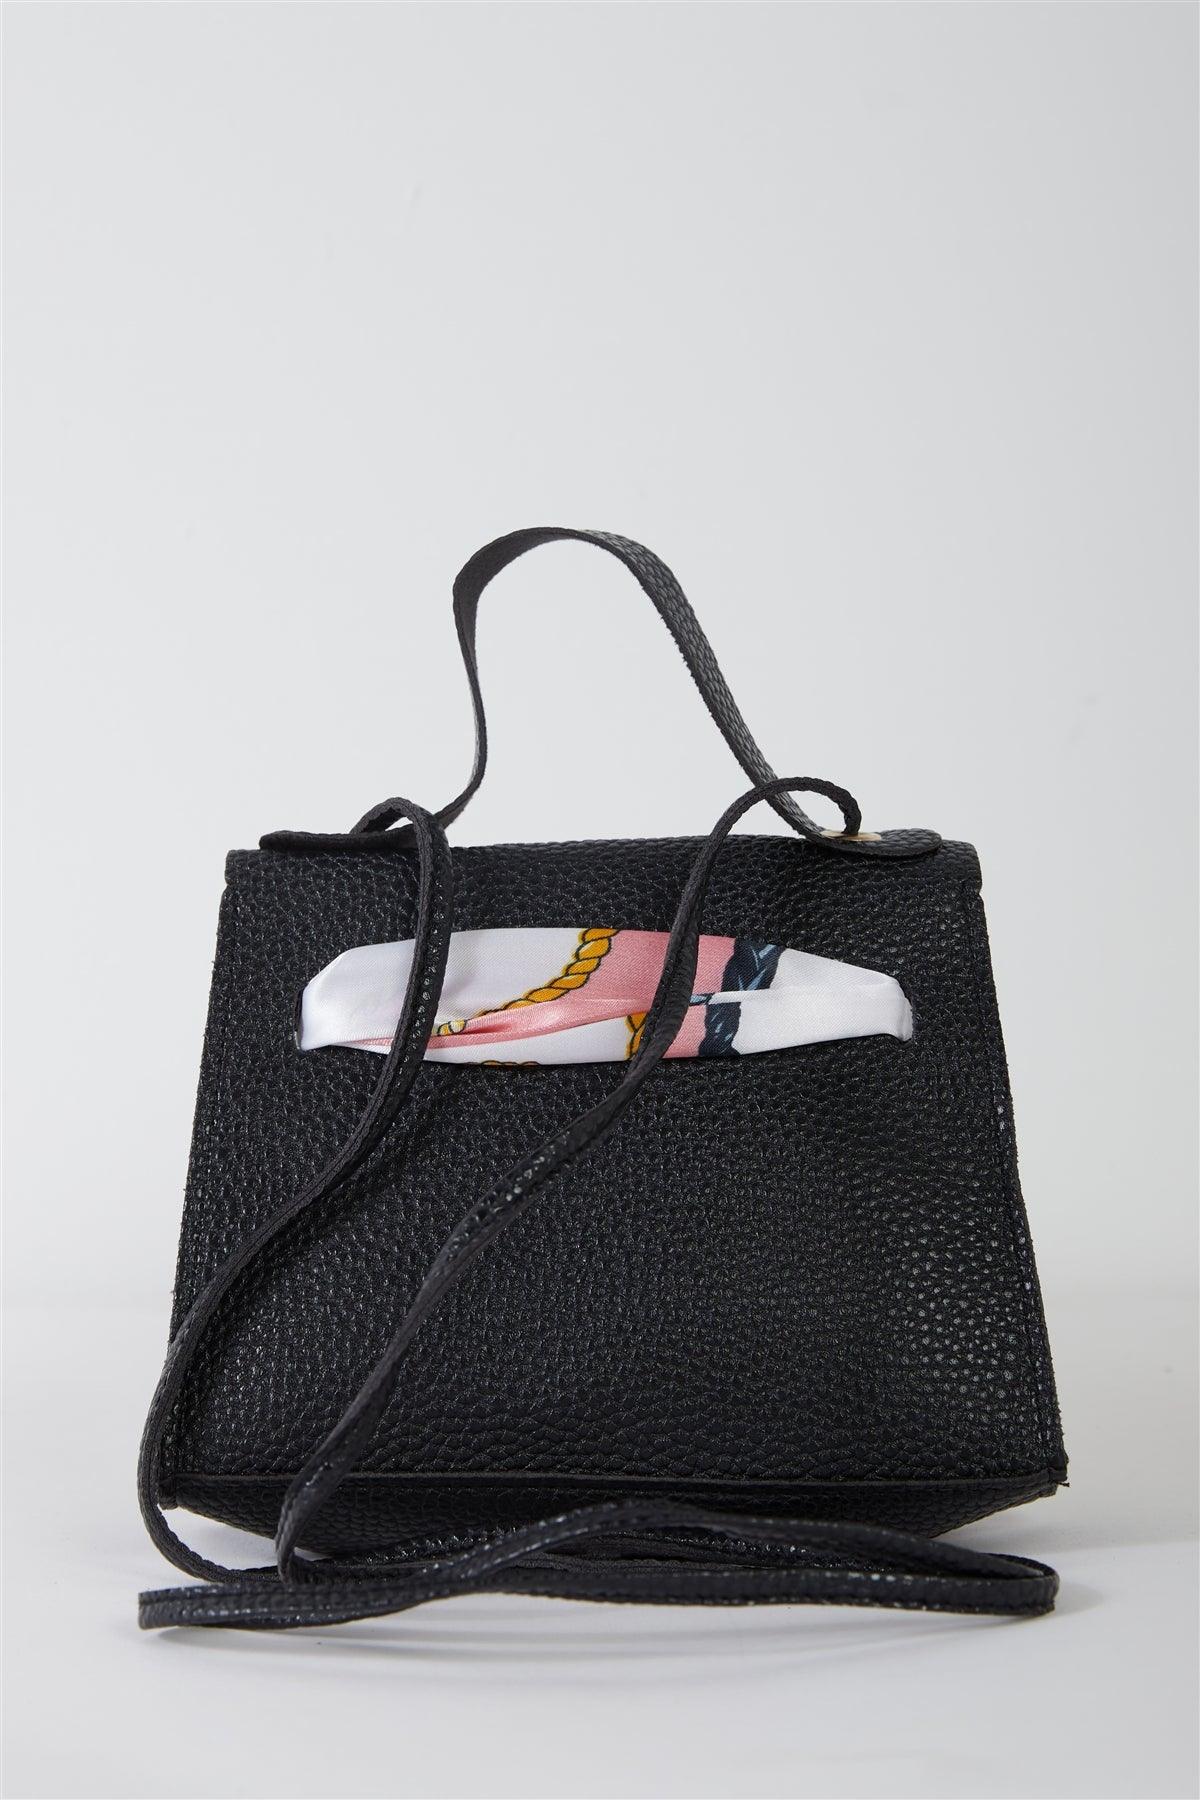 Black Textured Pleather Satin Printed Twilly Scarf Detail Flap Satchel Handbag /3 Bags